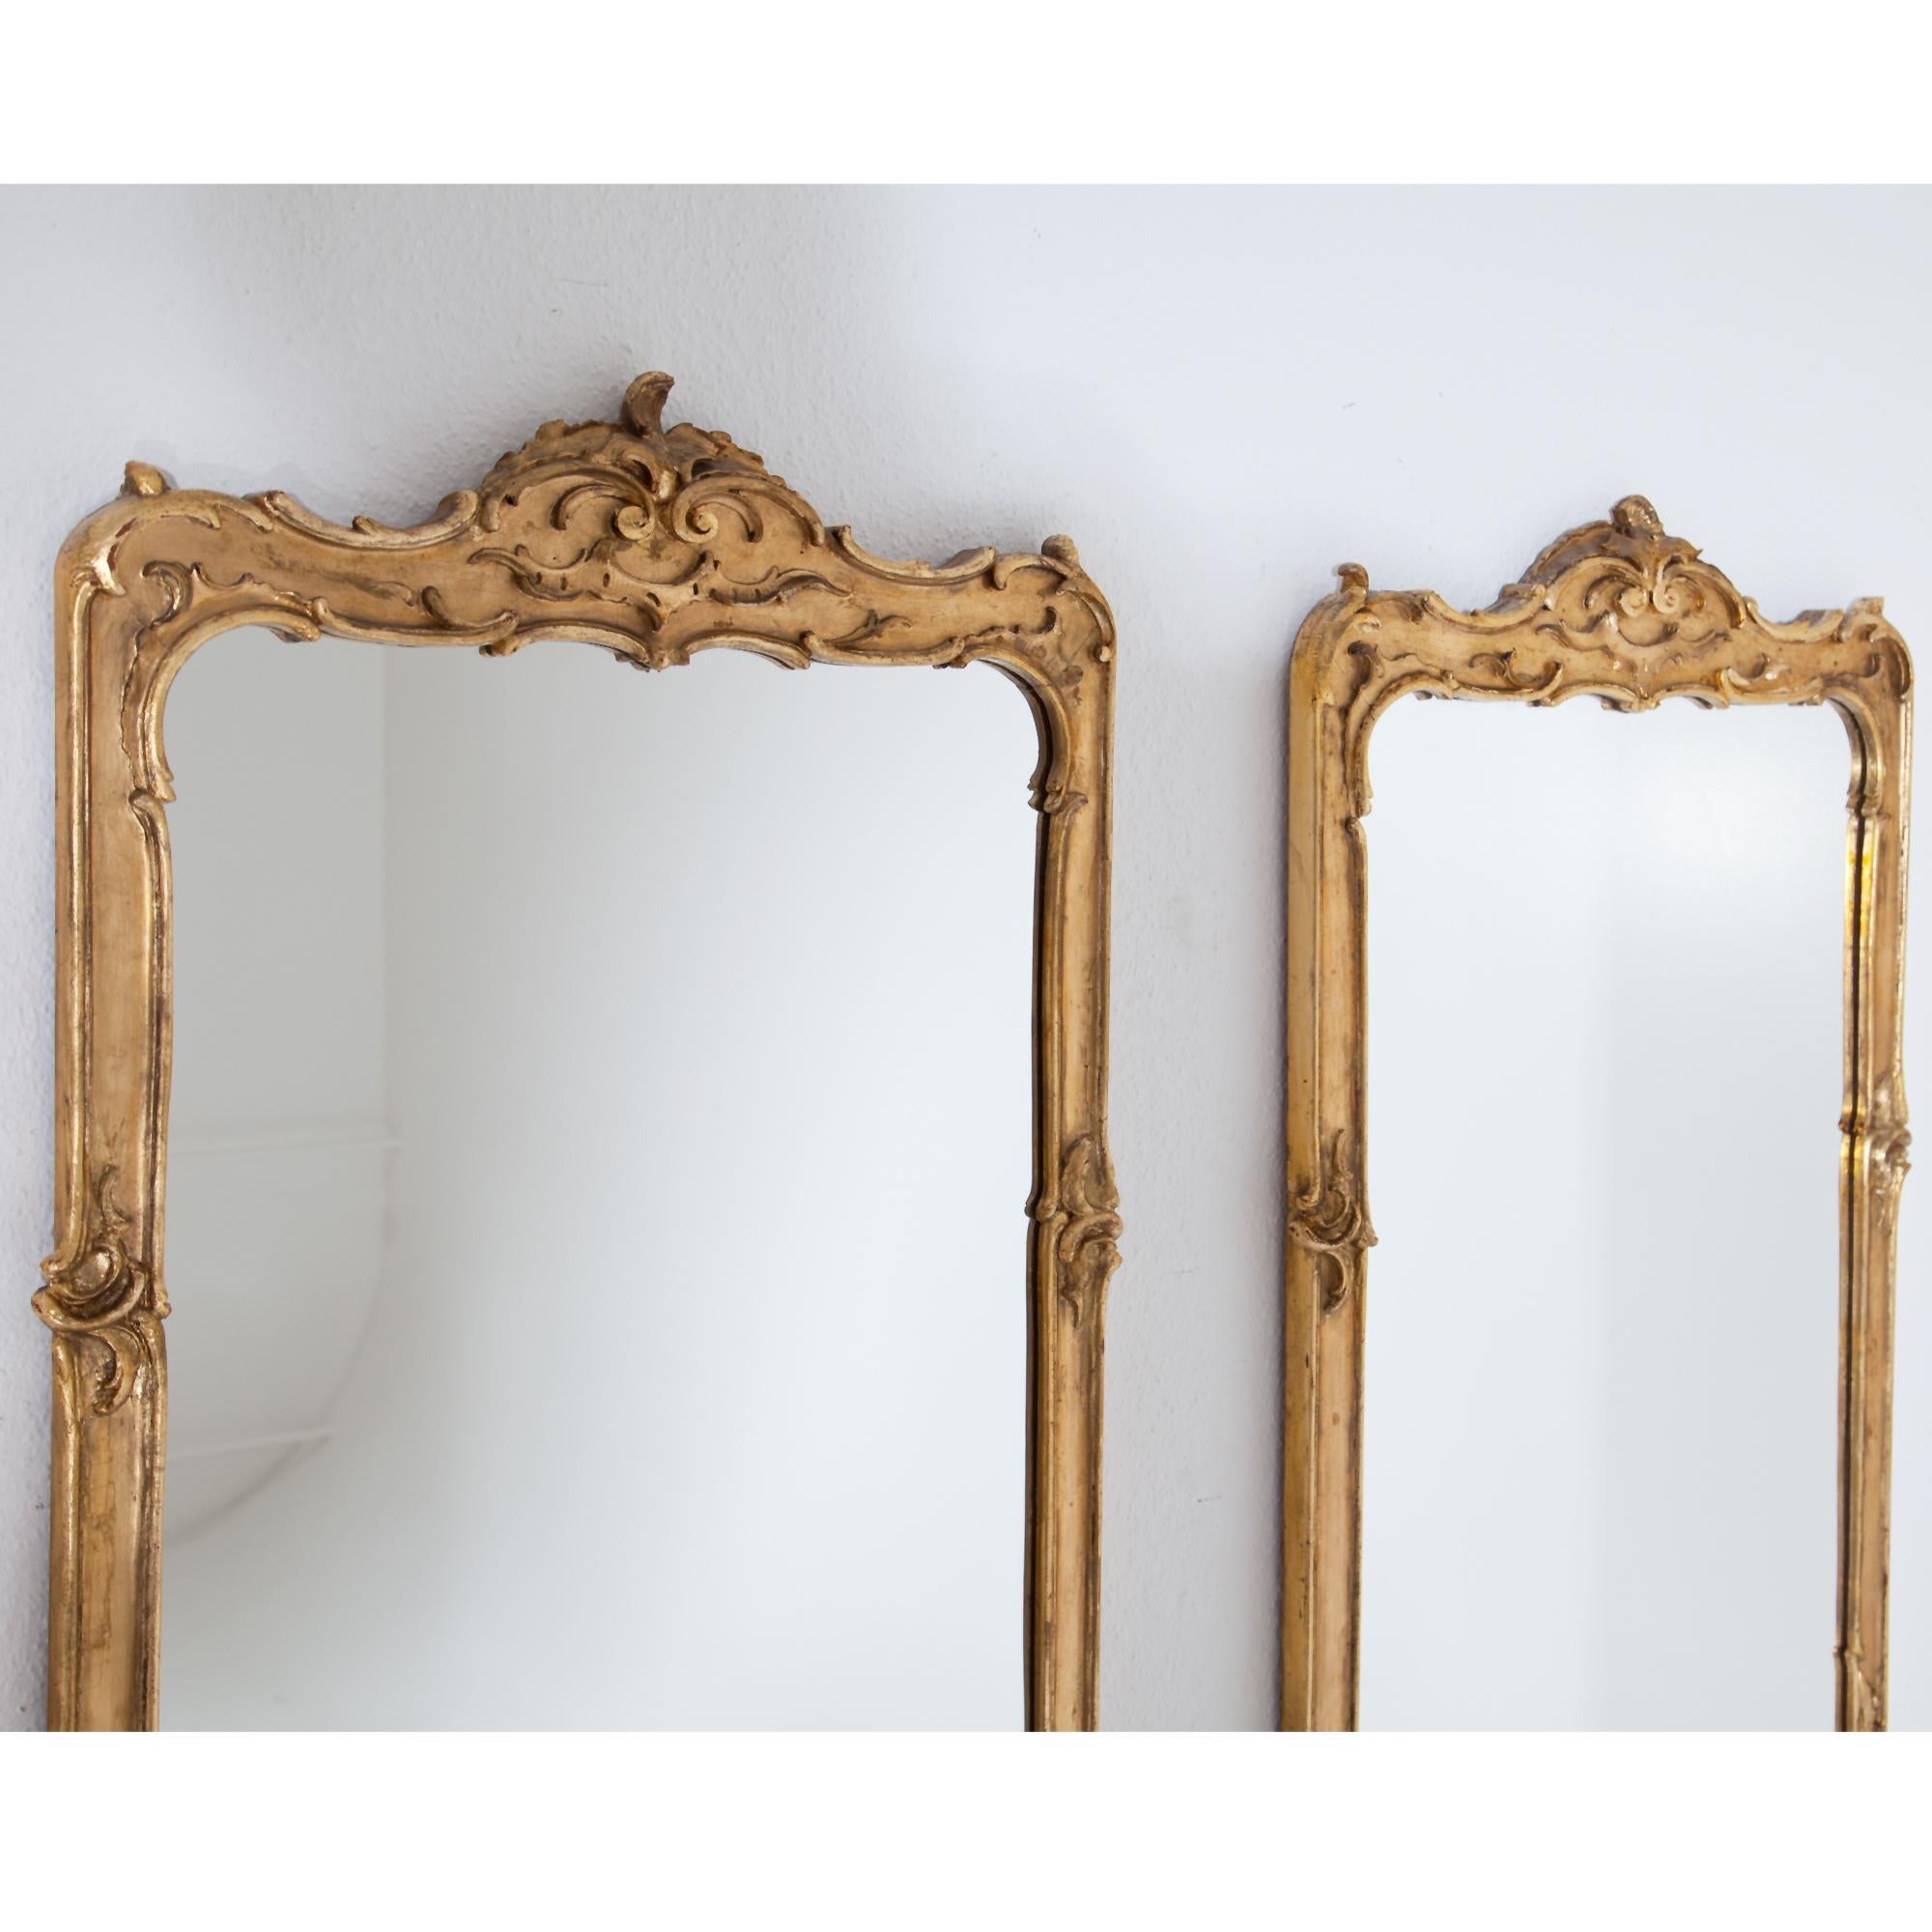 European Pair of Gilt Rococo-Style Wall Mirrors, 19th-20th Century